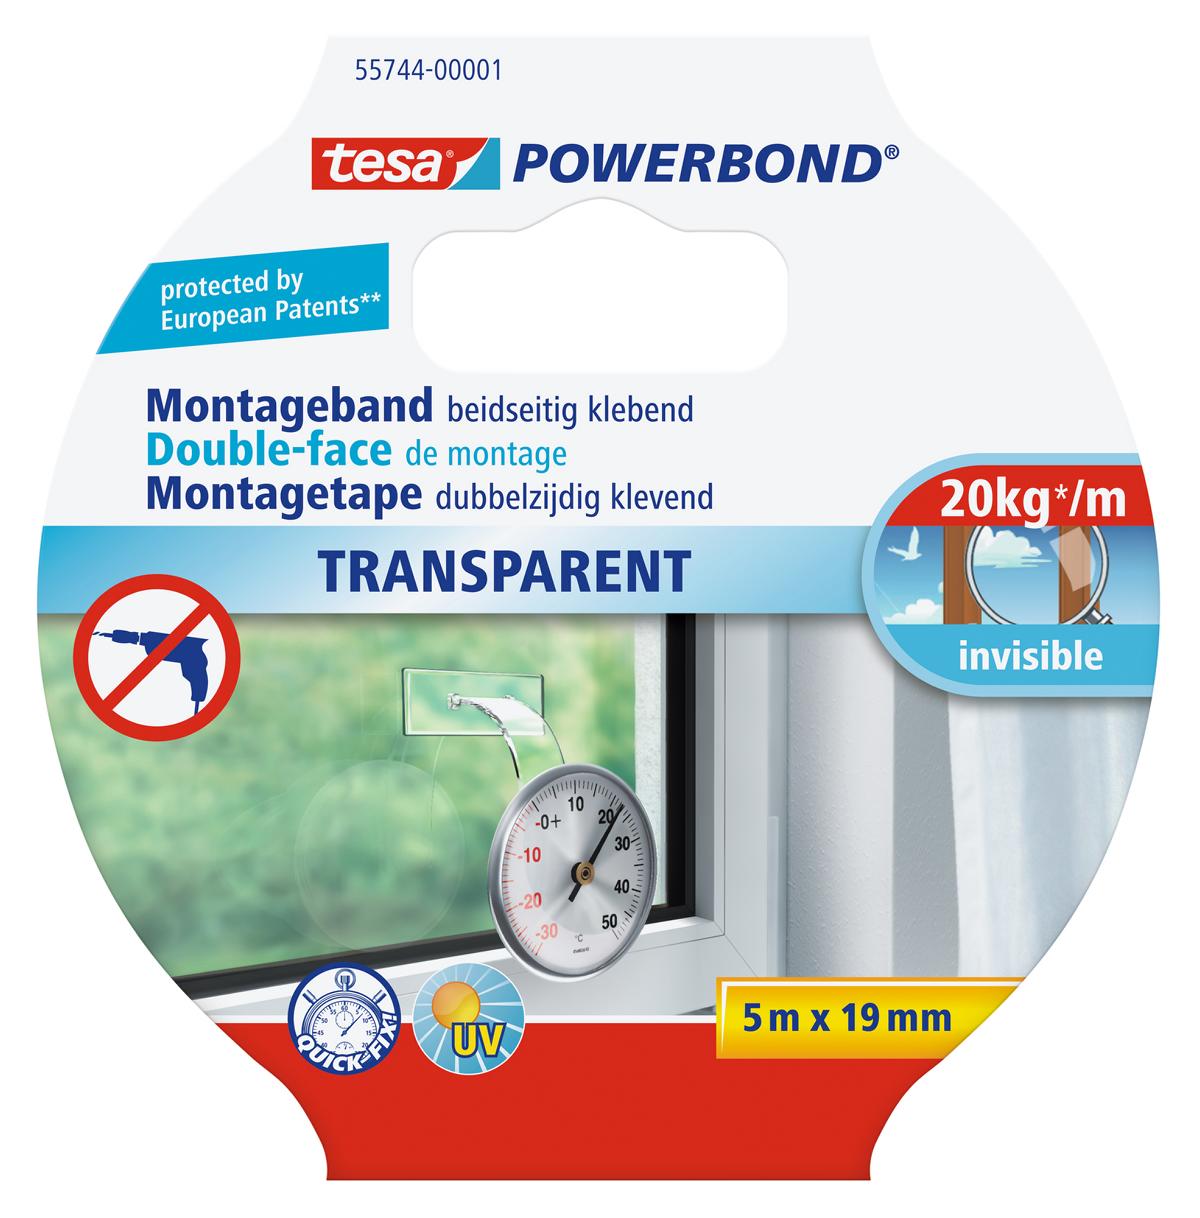 tesa Powerbond Montageband Transparent, 5 m